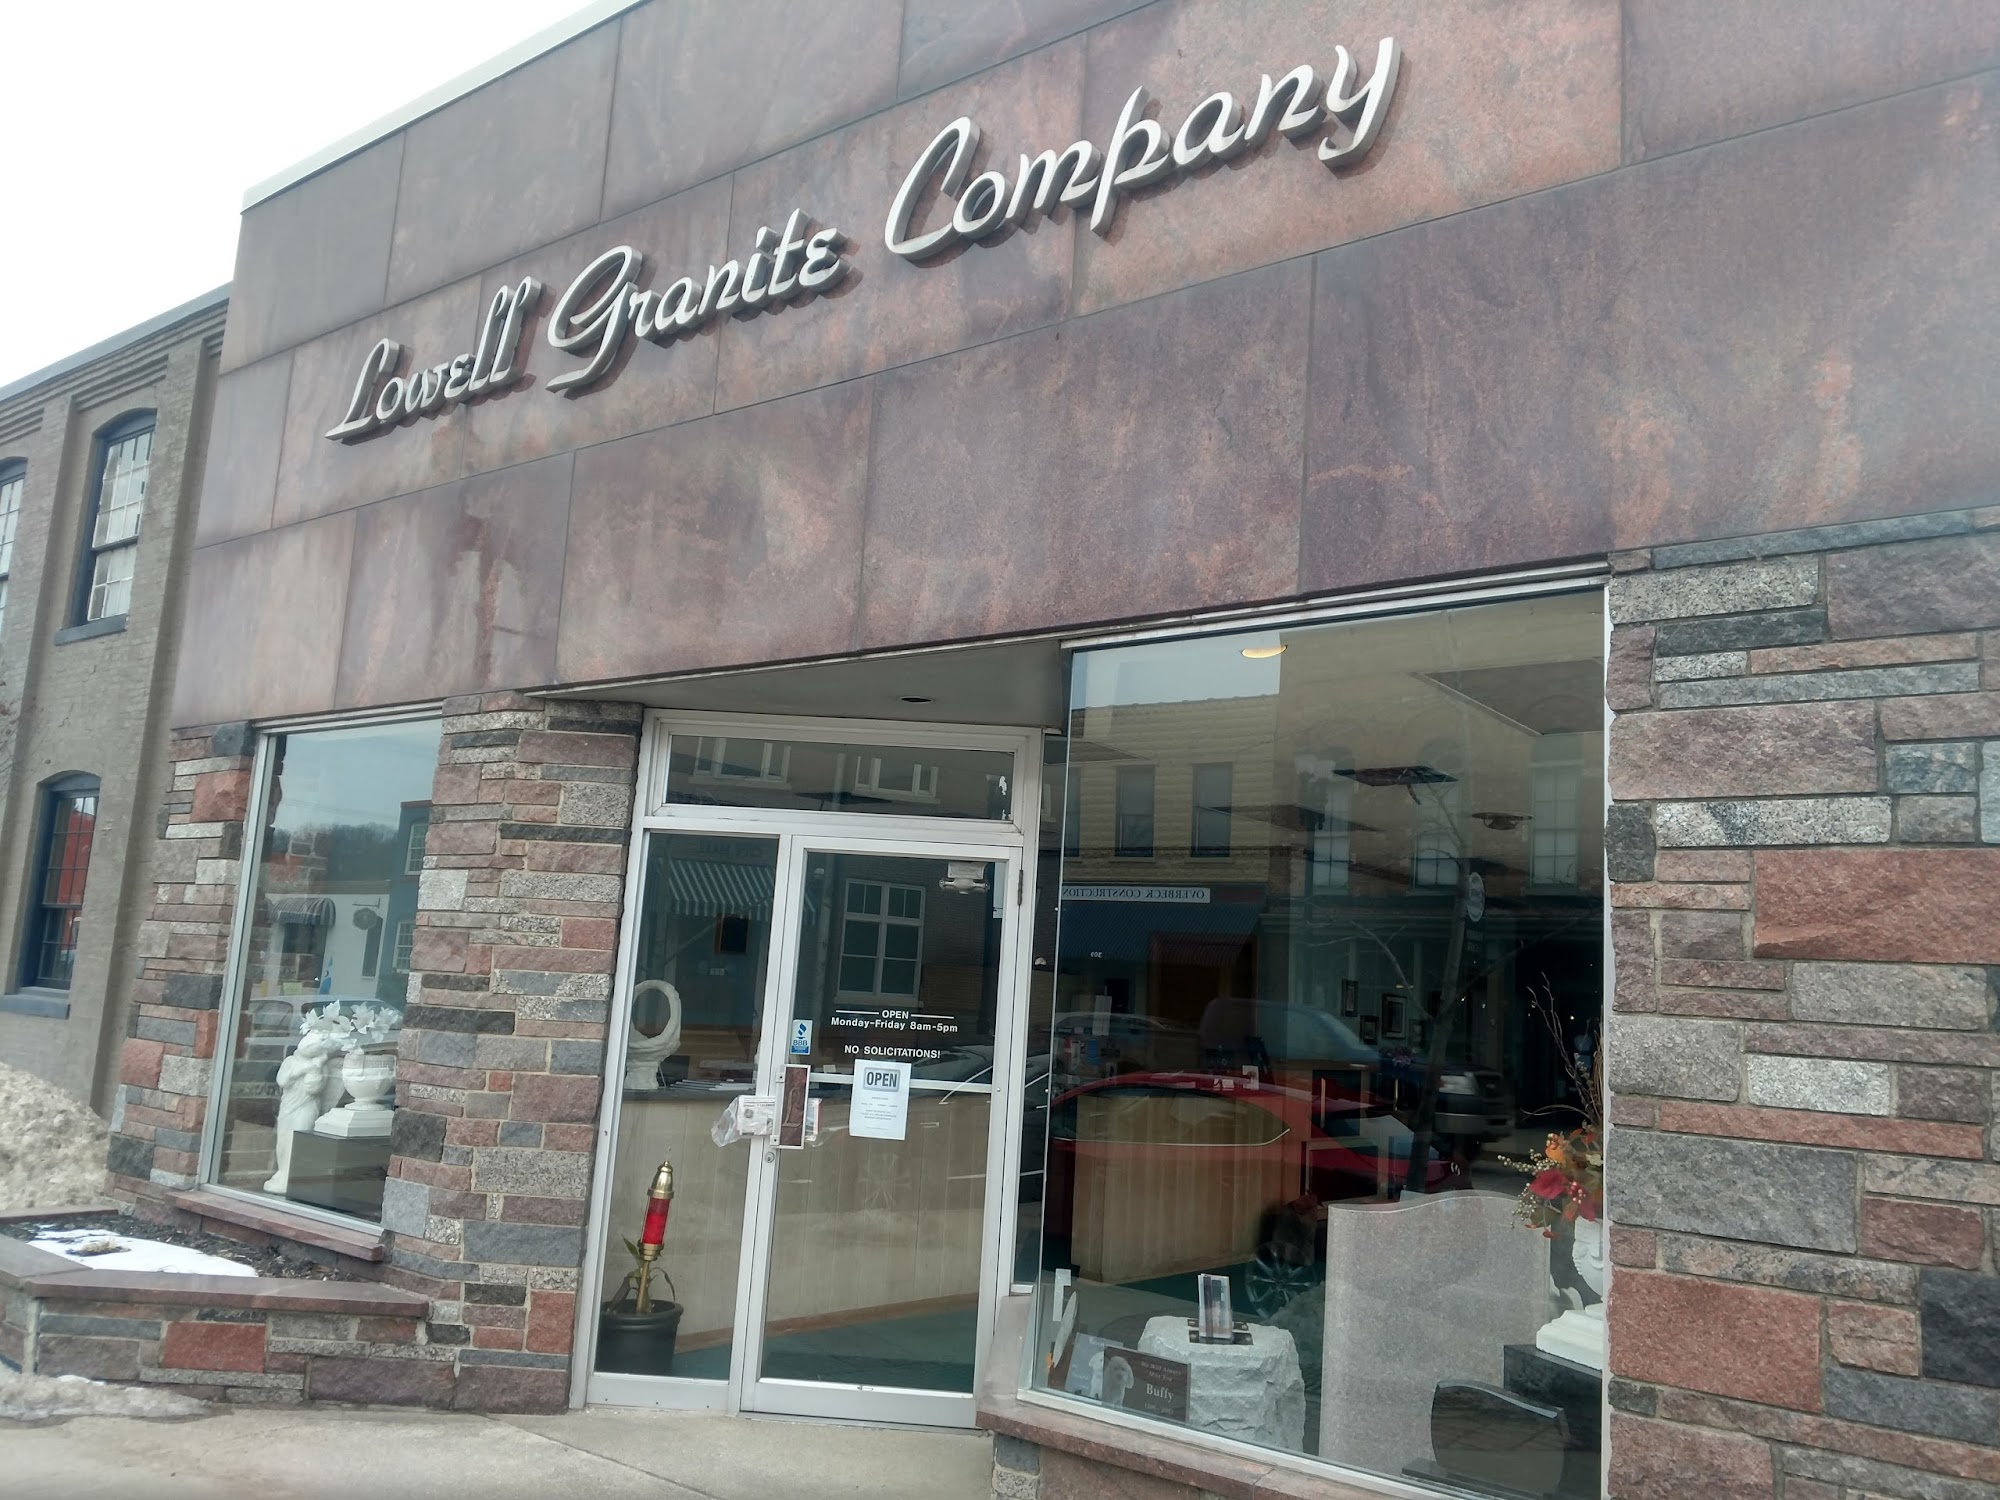 Lowell Granite Company 306 E Main St, Lowell Michigan 49331